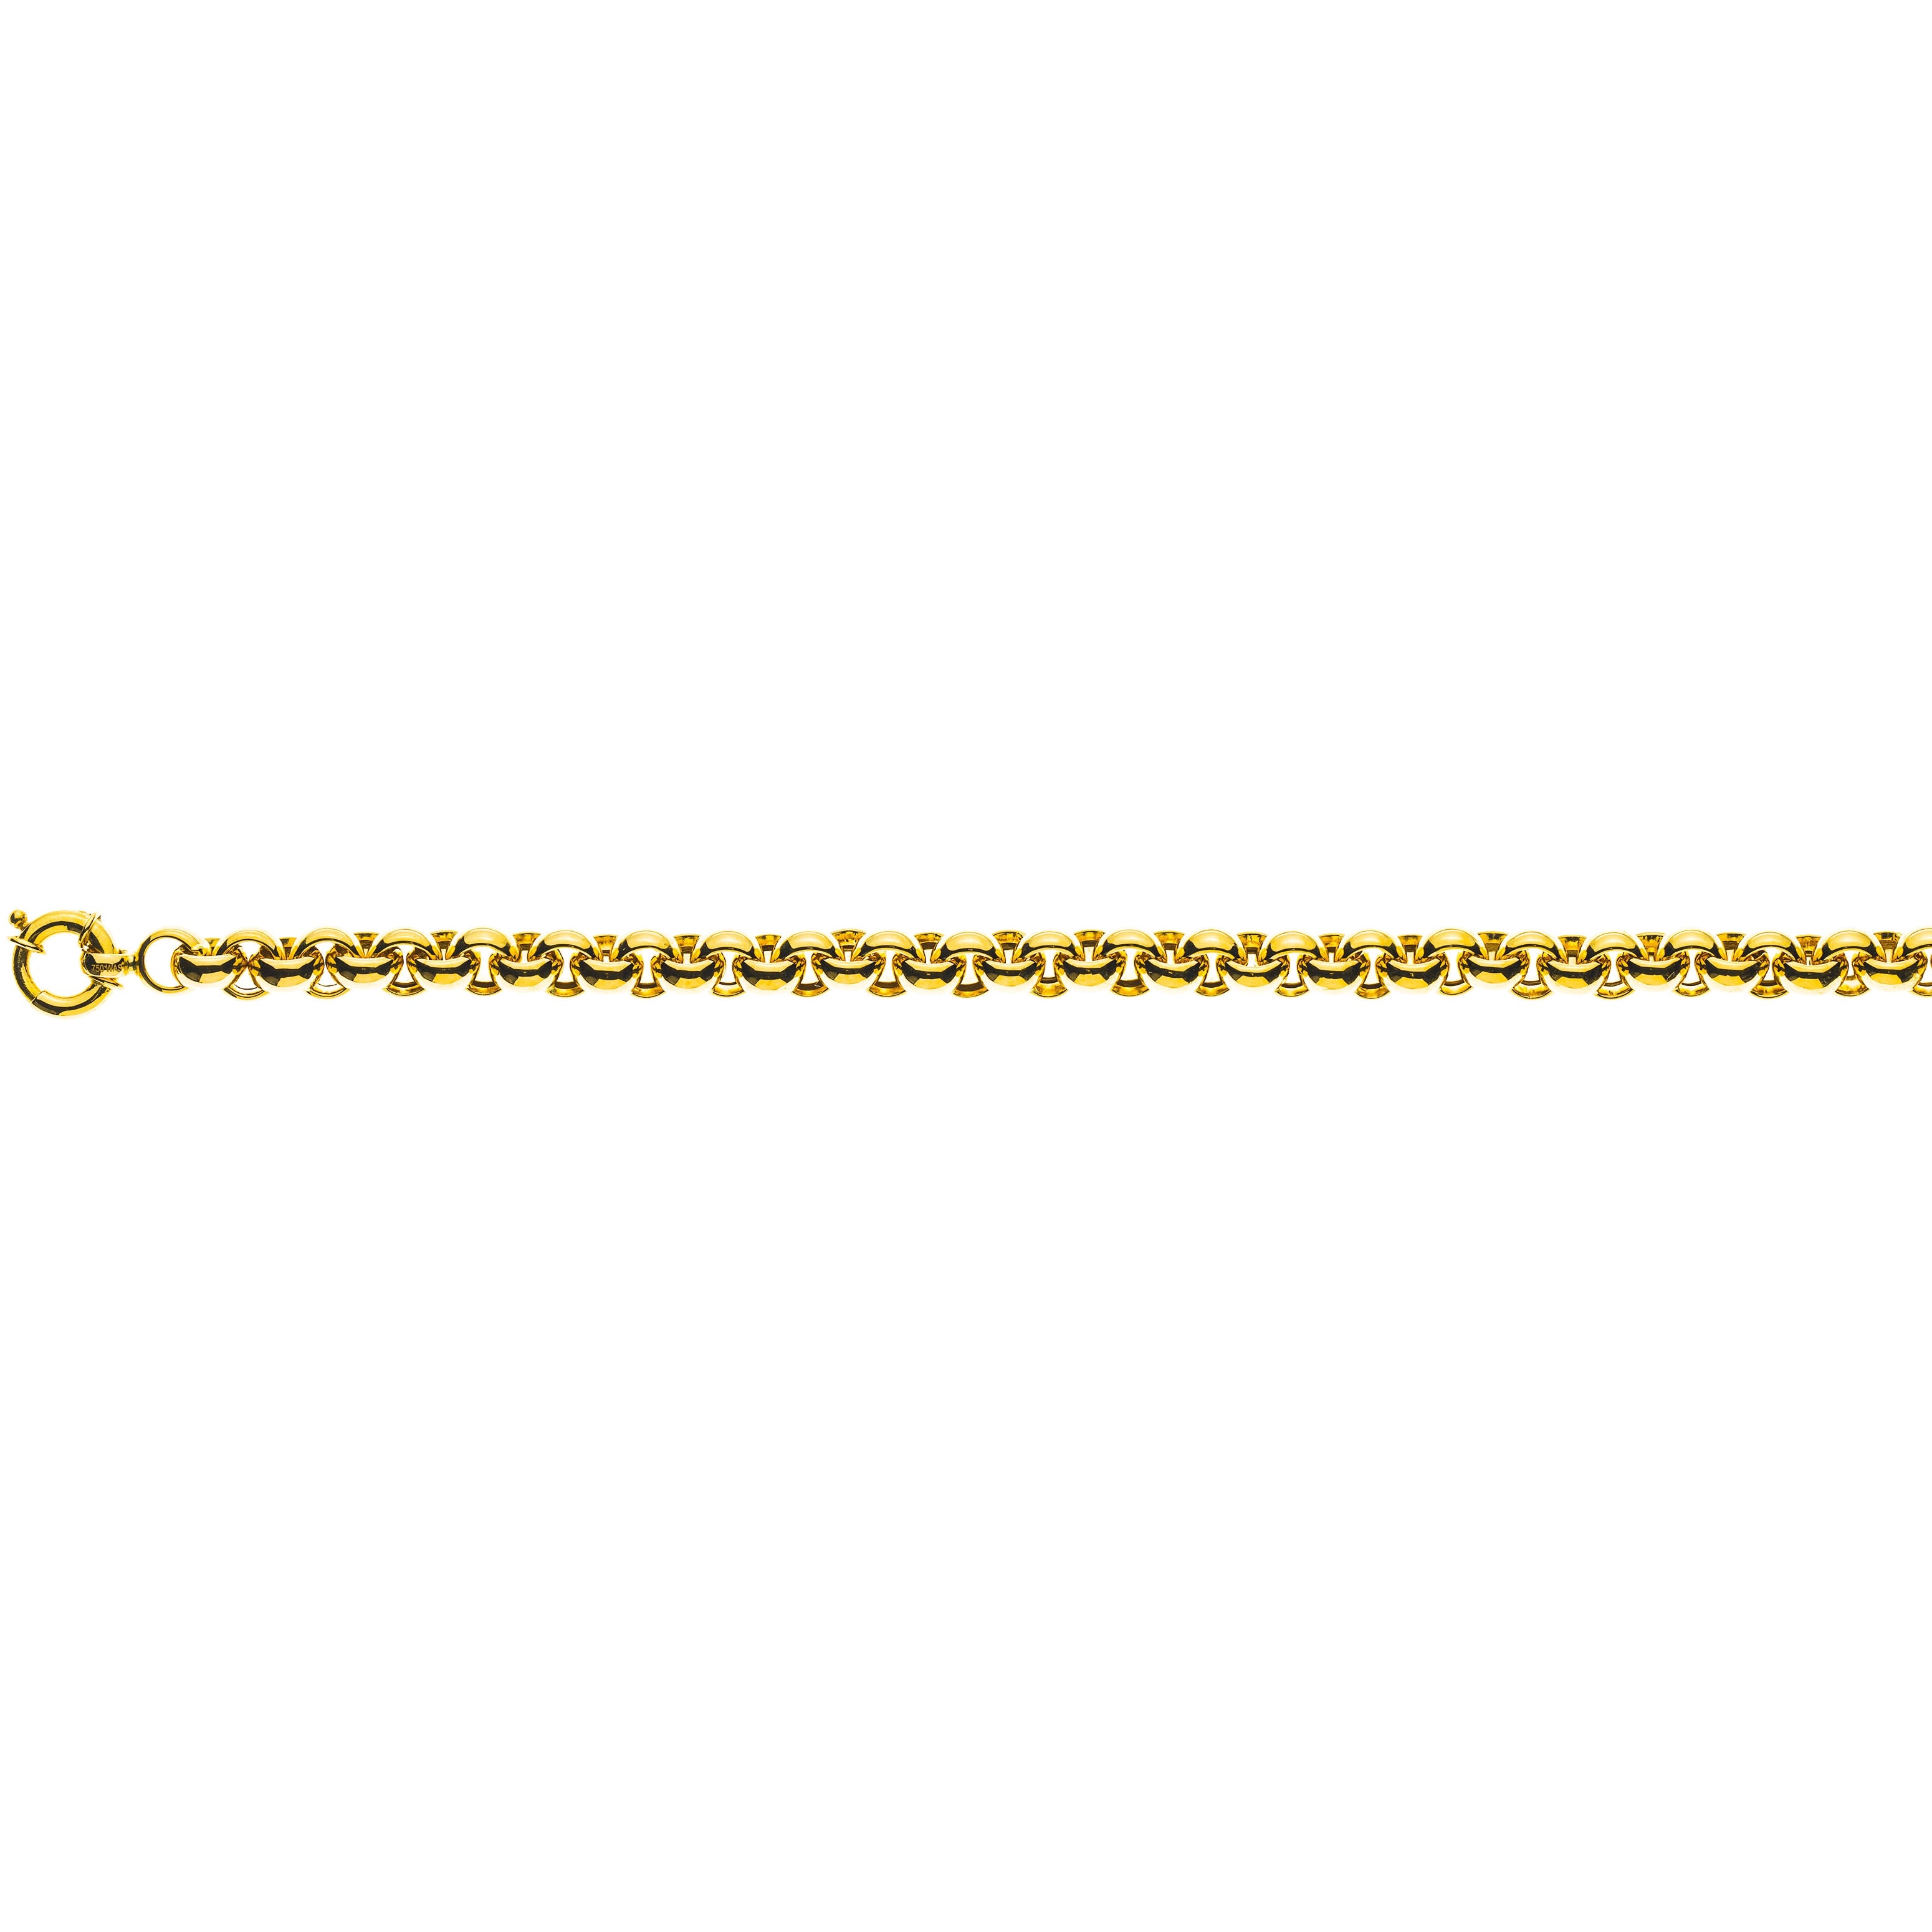 Halbmassives Erbs-Armband aus 750er Gelbgold, ca. 7.0mm dick, mit Federring-Verschluss